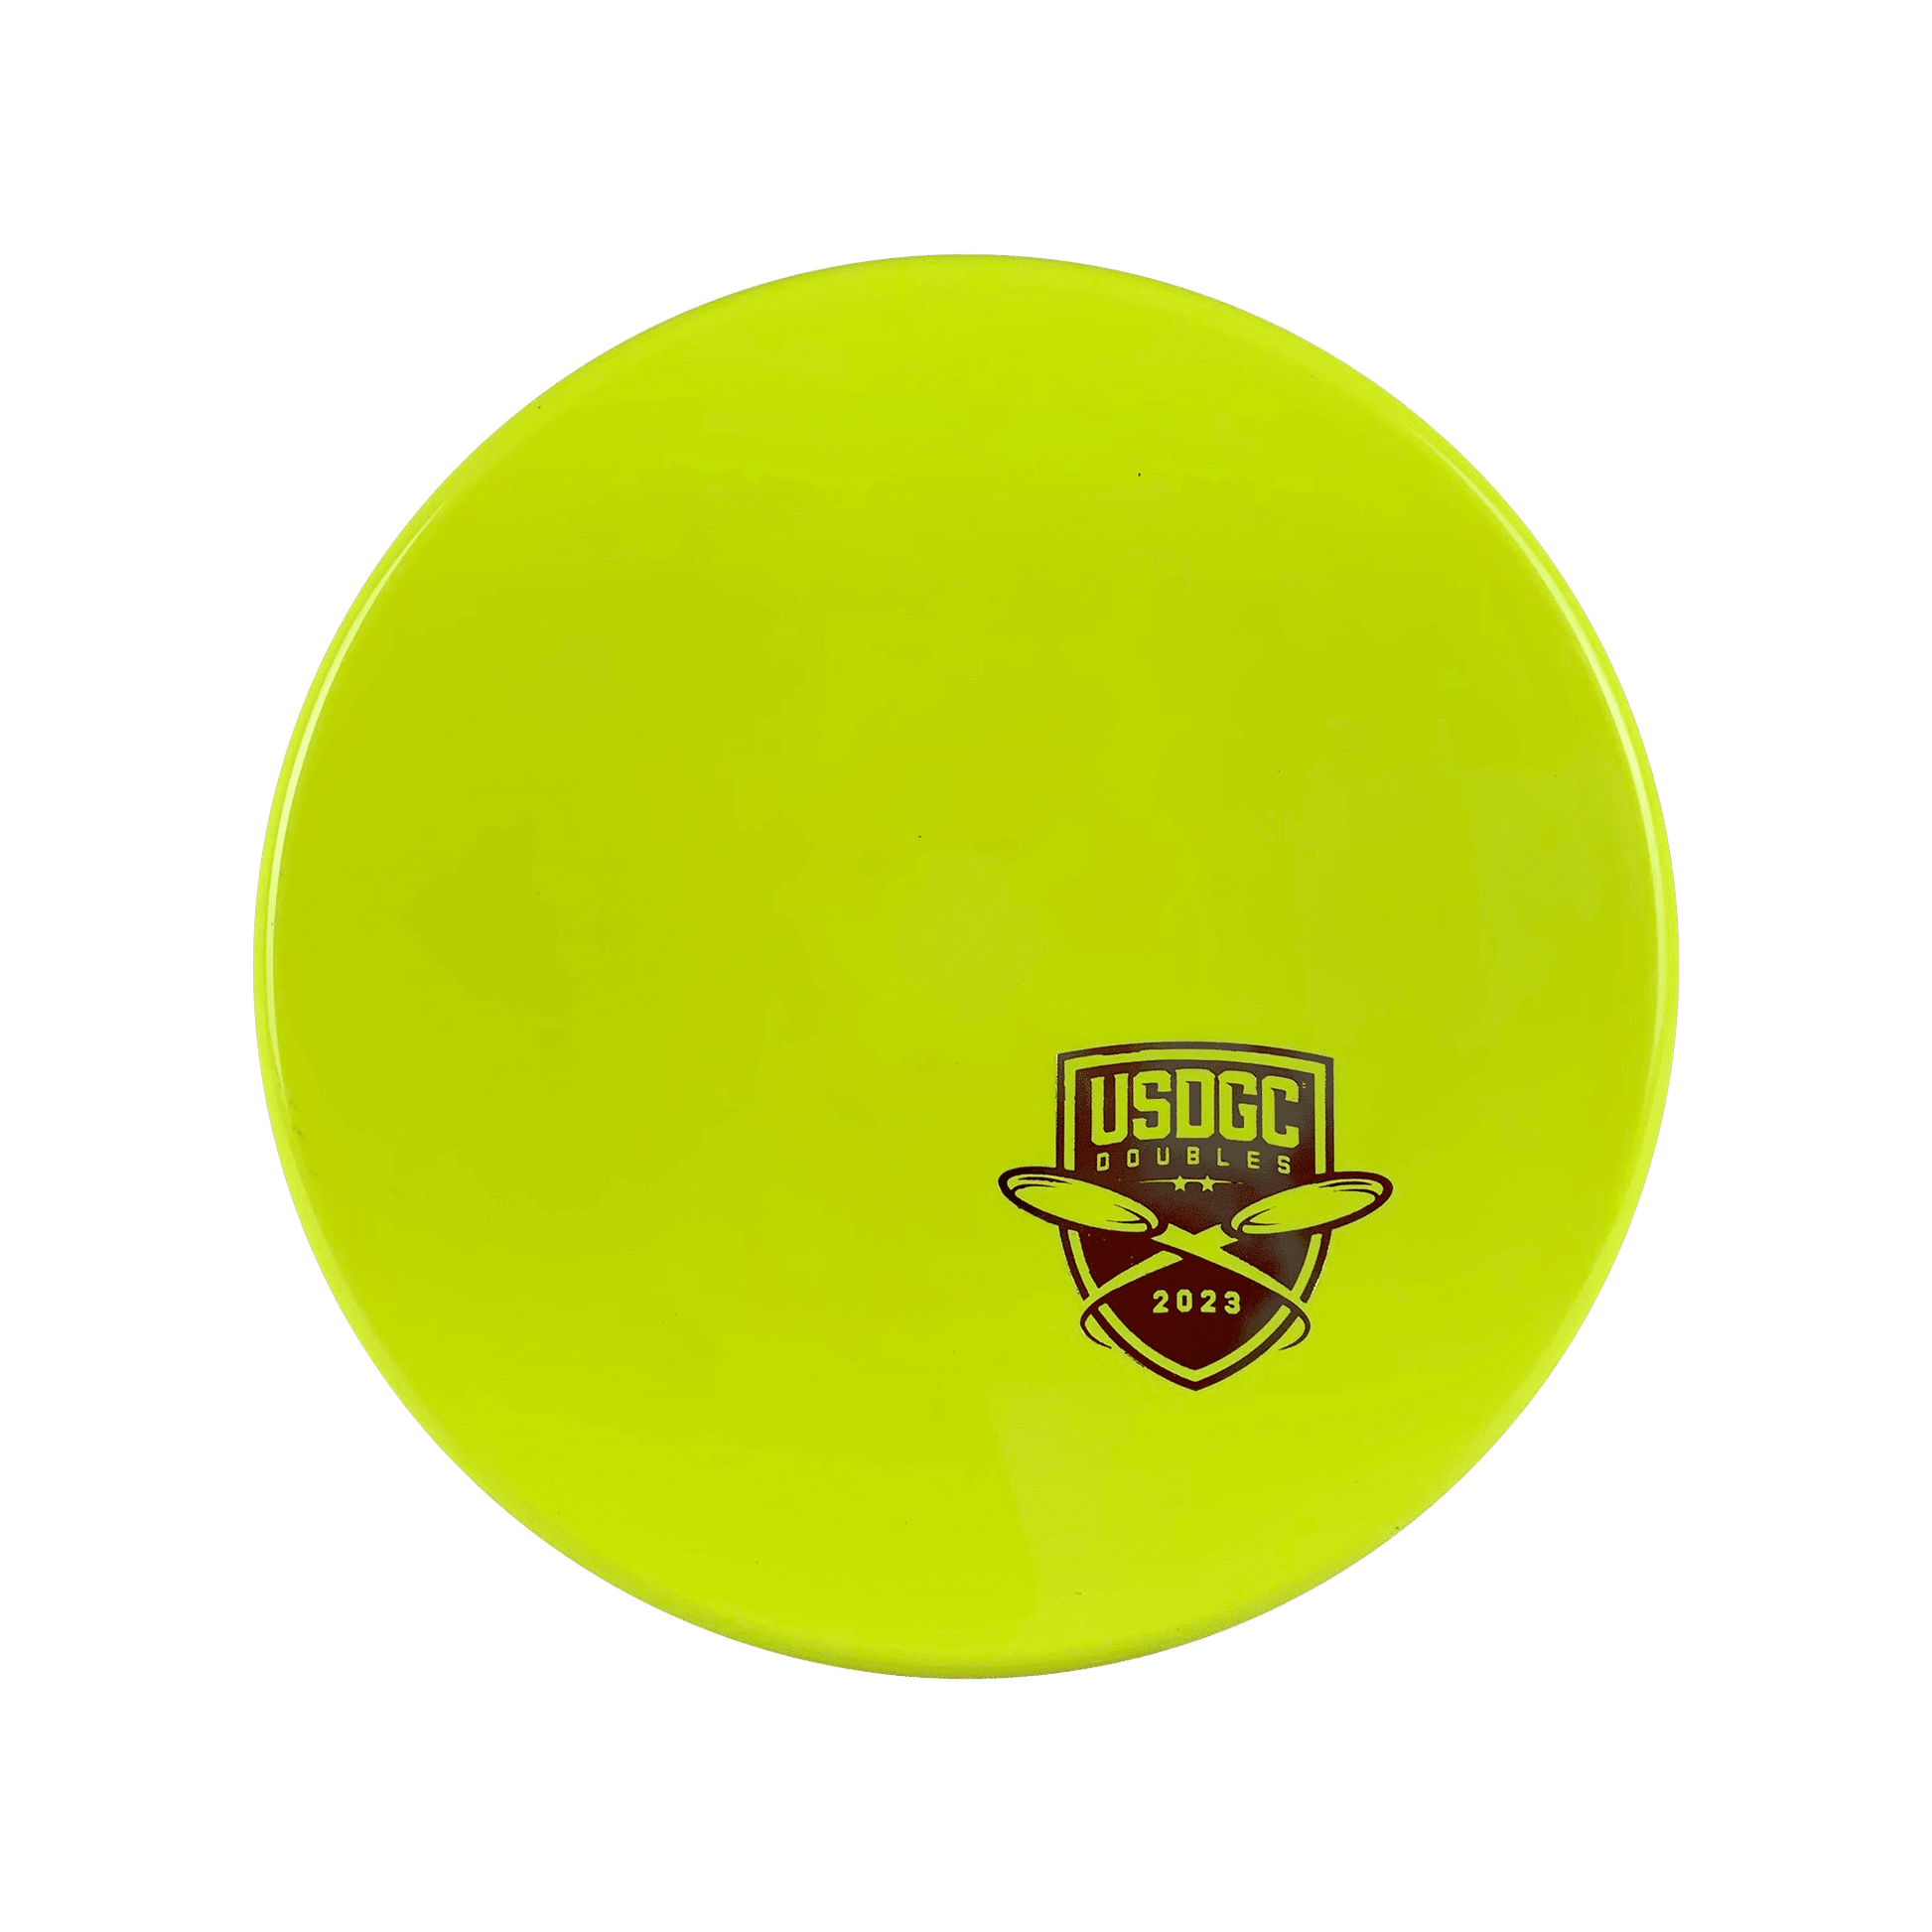 Star Toro - USDGC Doubles '23 Disc Innova yellow 173 